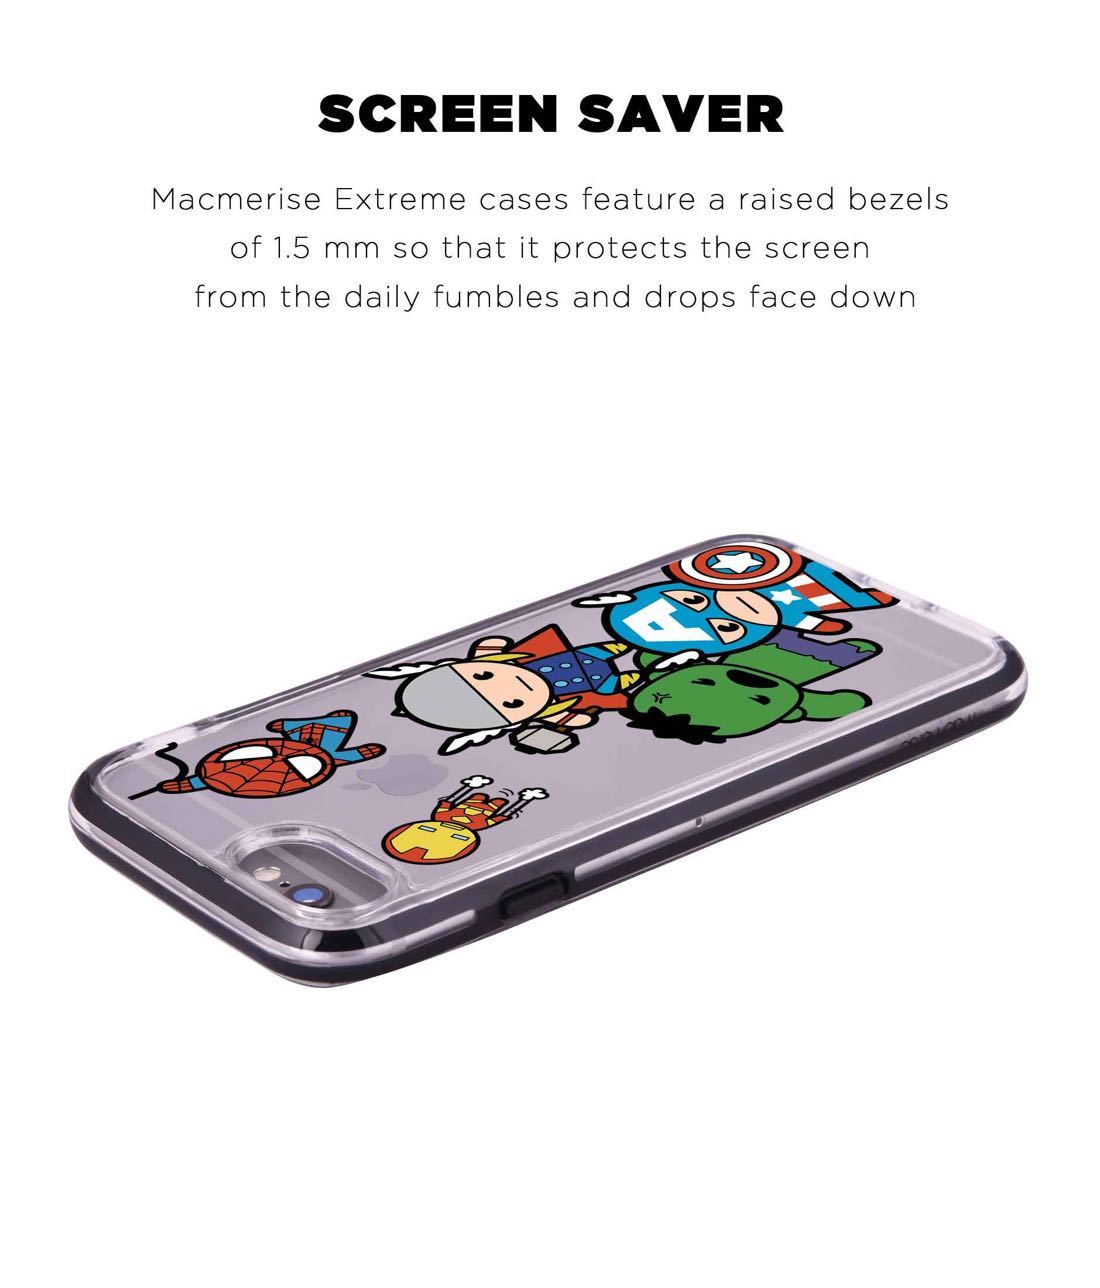 Kawaii Art Marvel Comics - Extreme Phone Case for iPhone 6S